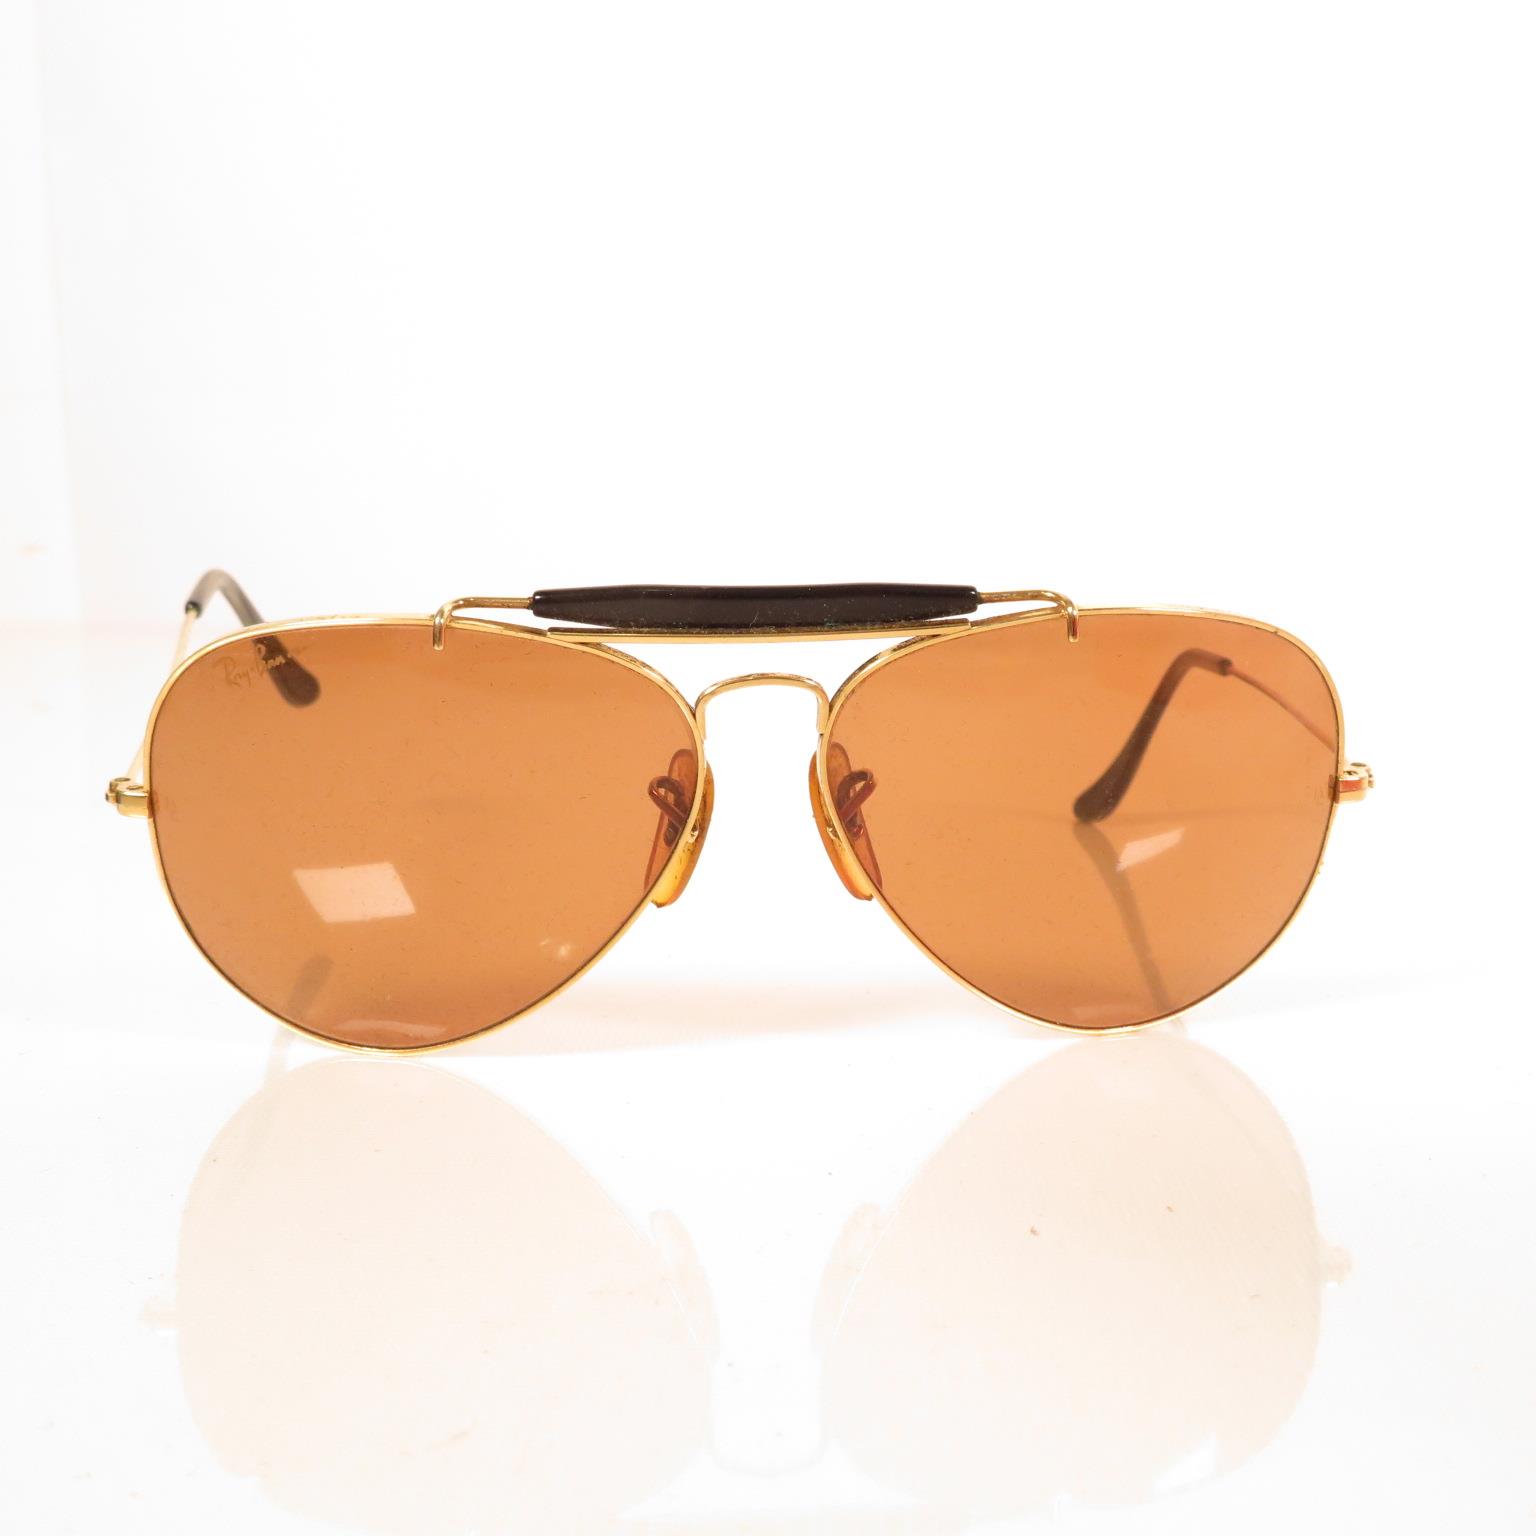 4x boxed Ray Bans Sunglasses - - Image 8 of 20